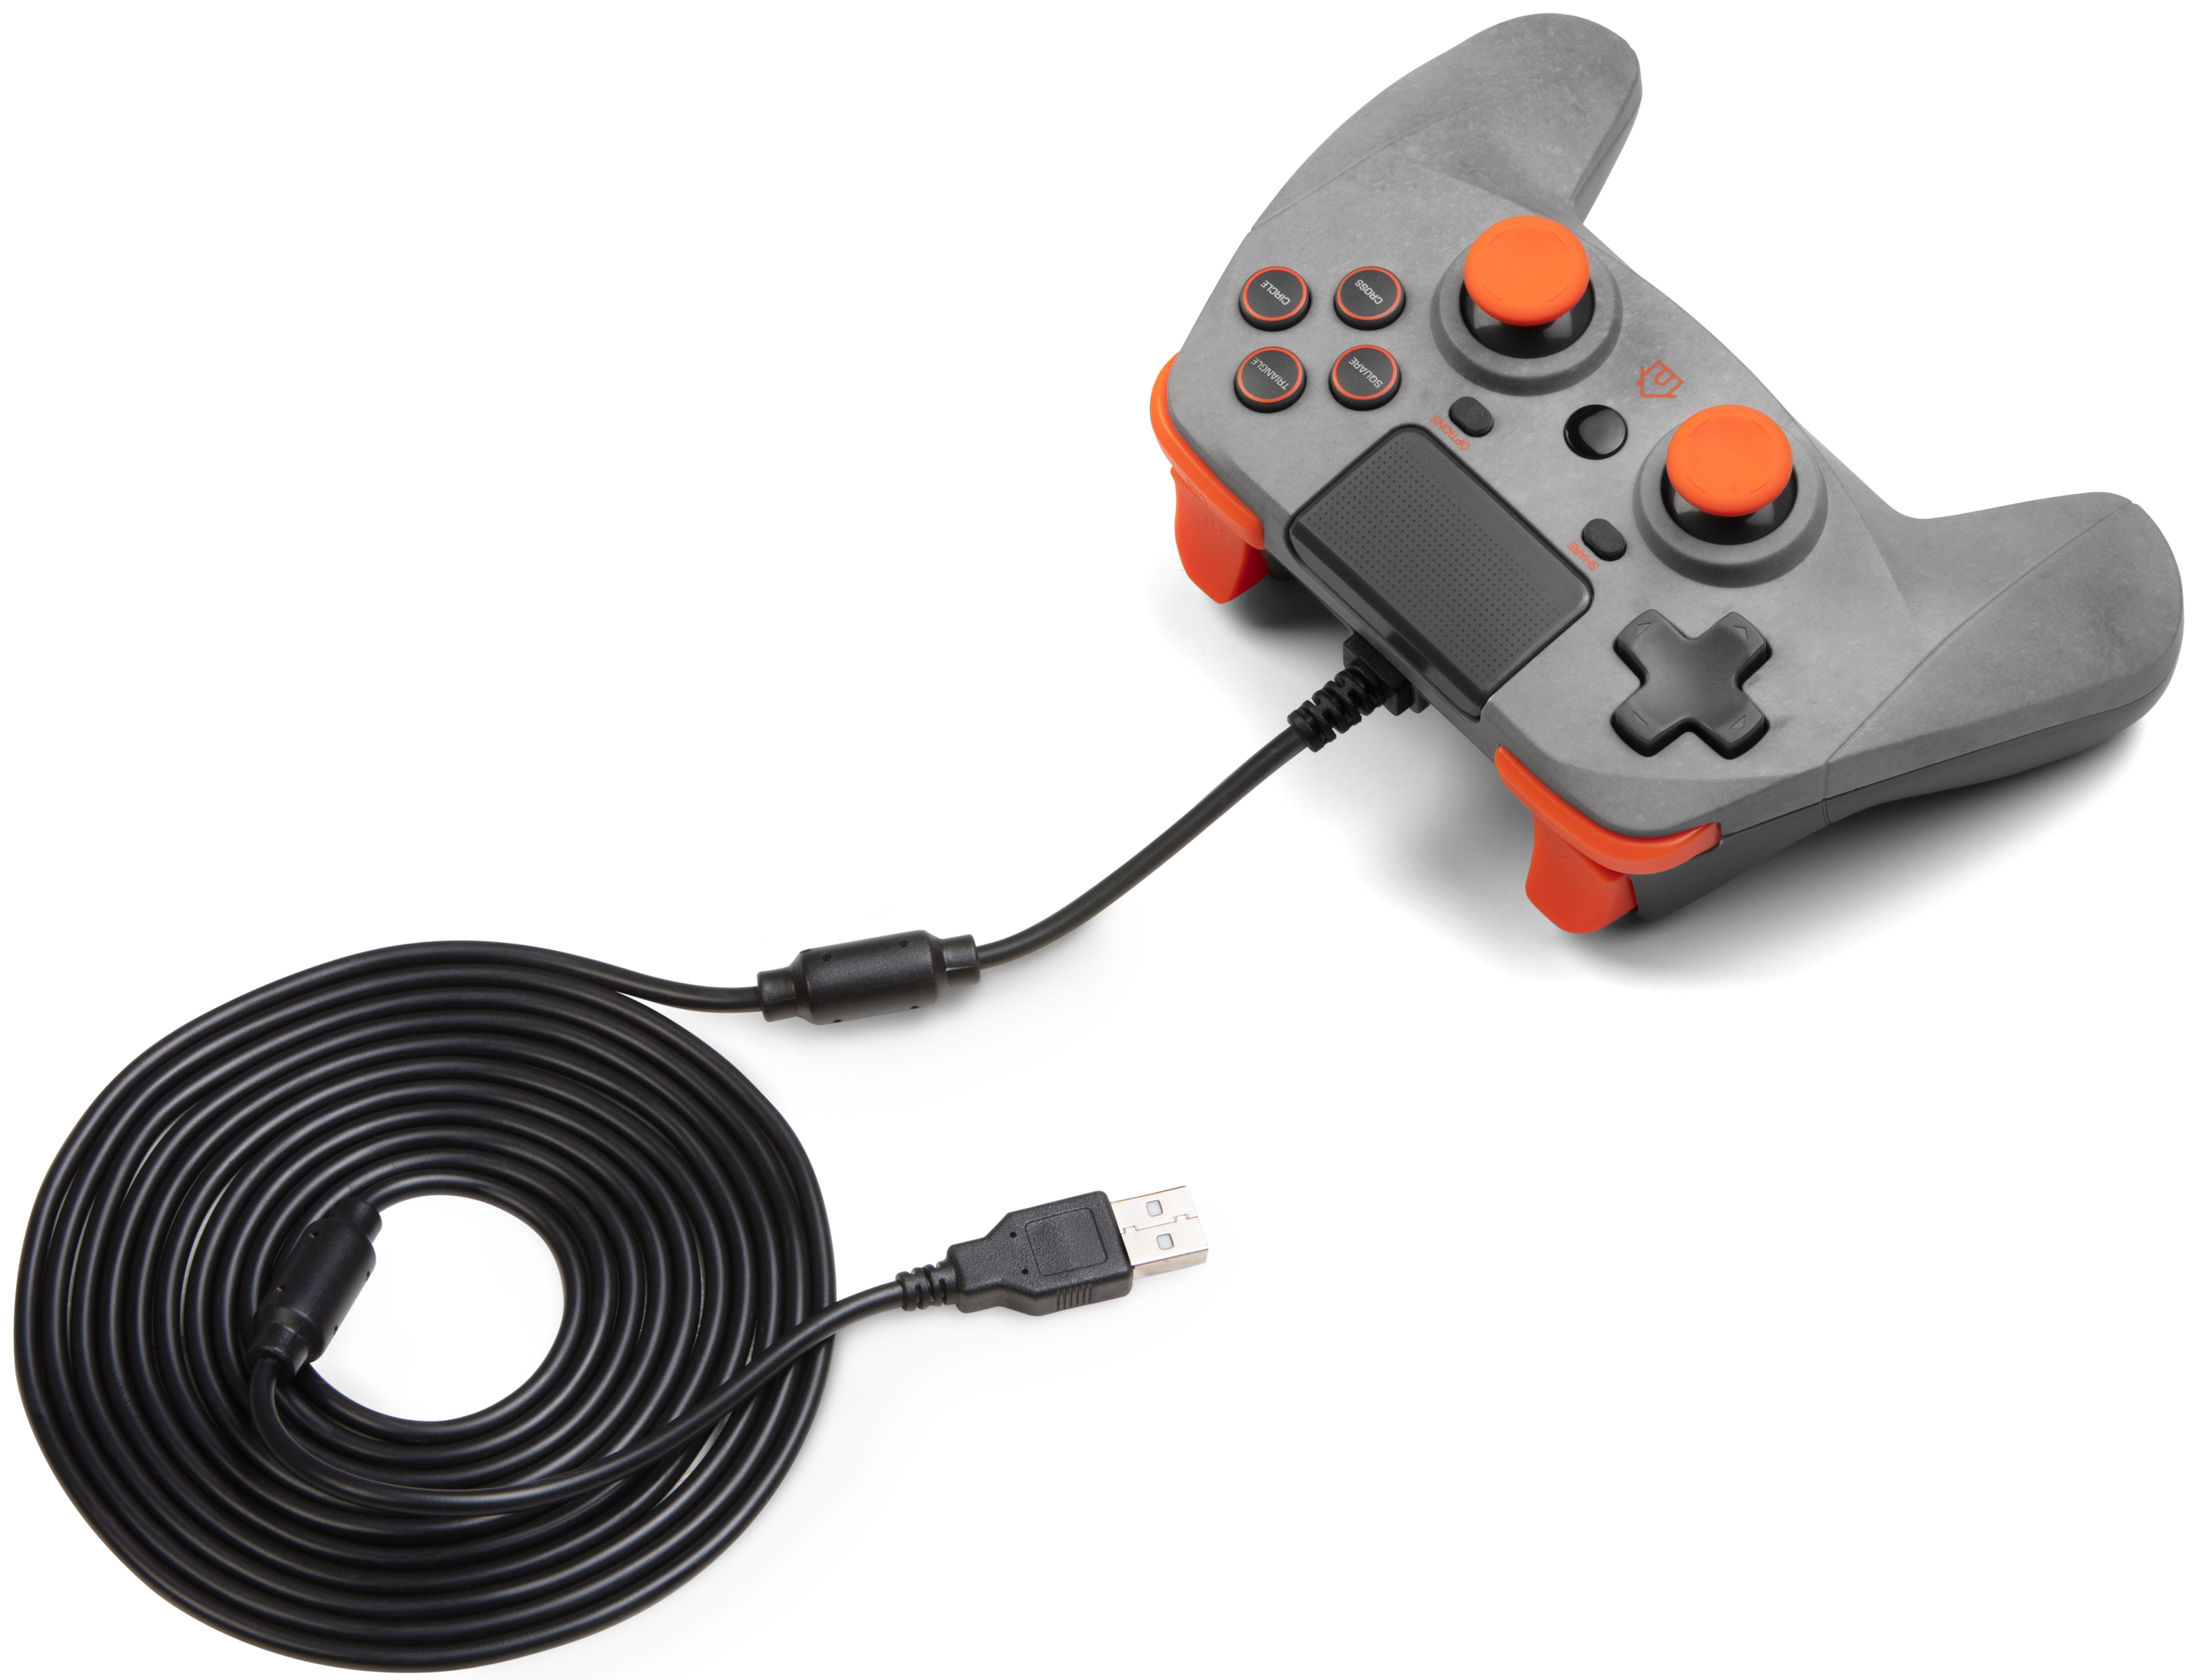 SNAKEBYTE Game:Pad 4 S ROCK 4 PlayStation Controller für Grau/Orange